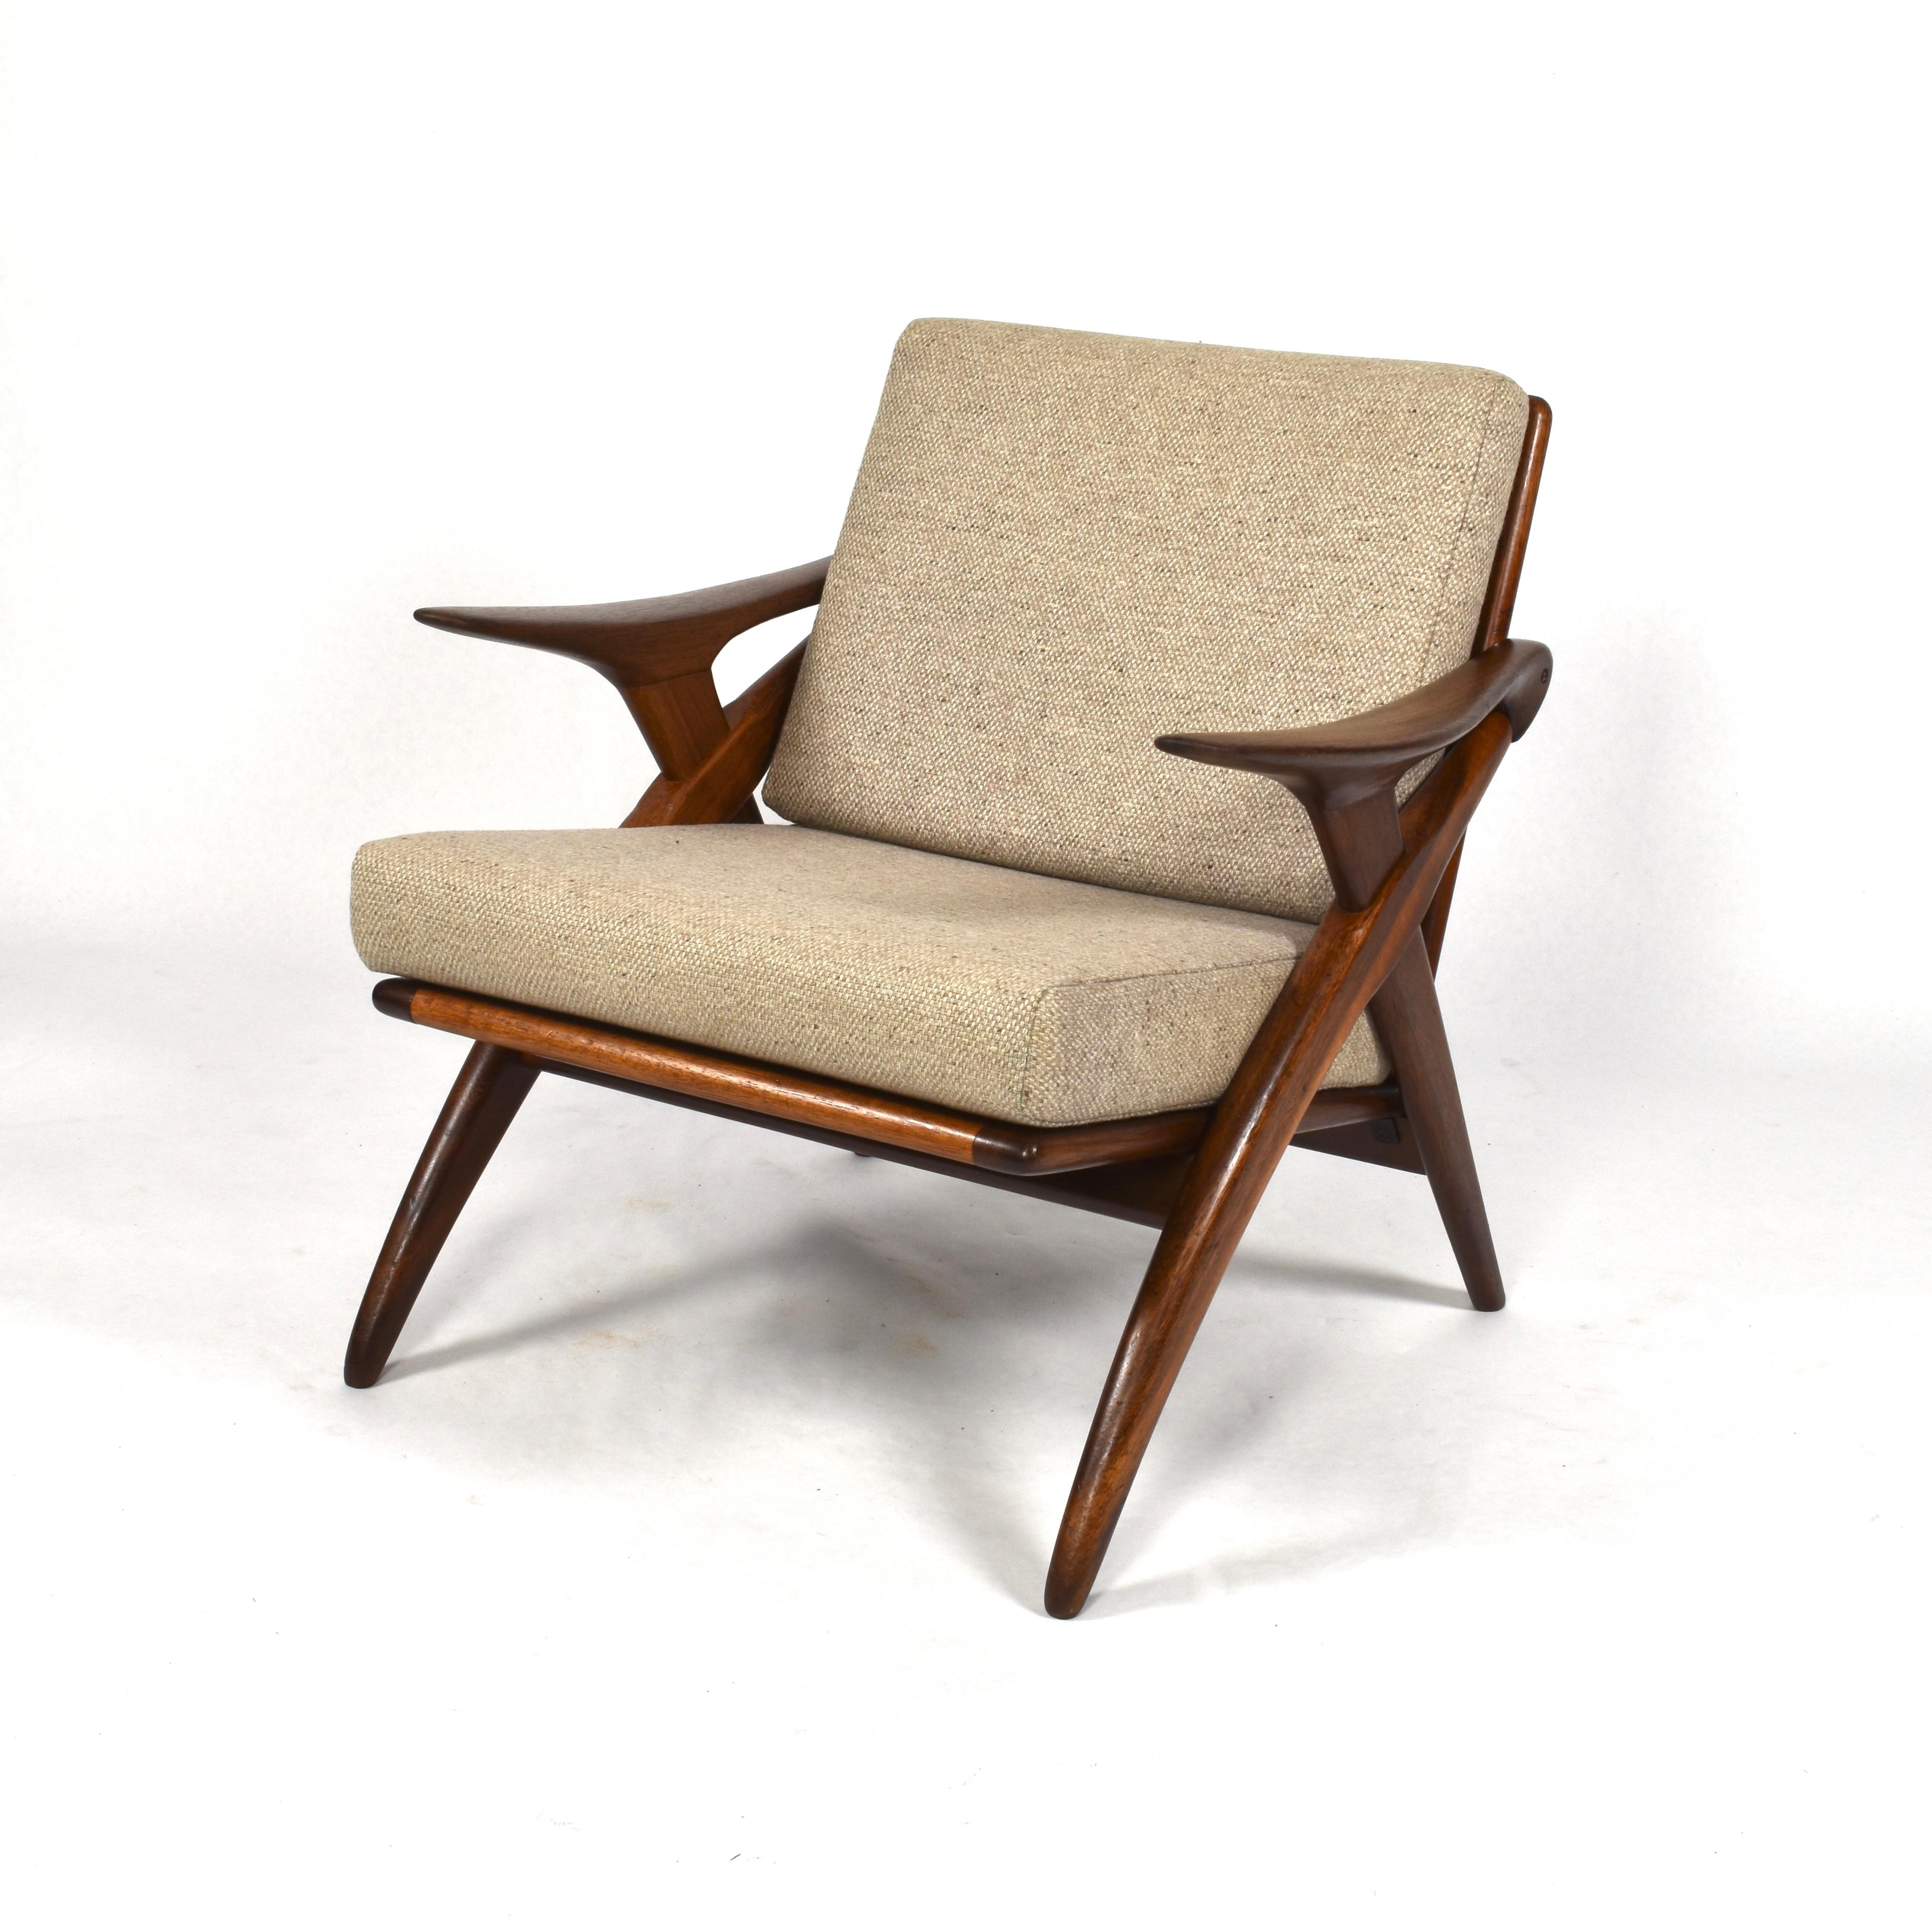 Wool Teak Lounge Chair by De Ster Gelderland, Netherlands, circa 1960